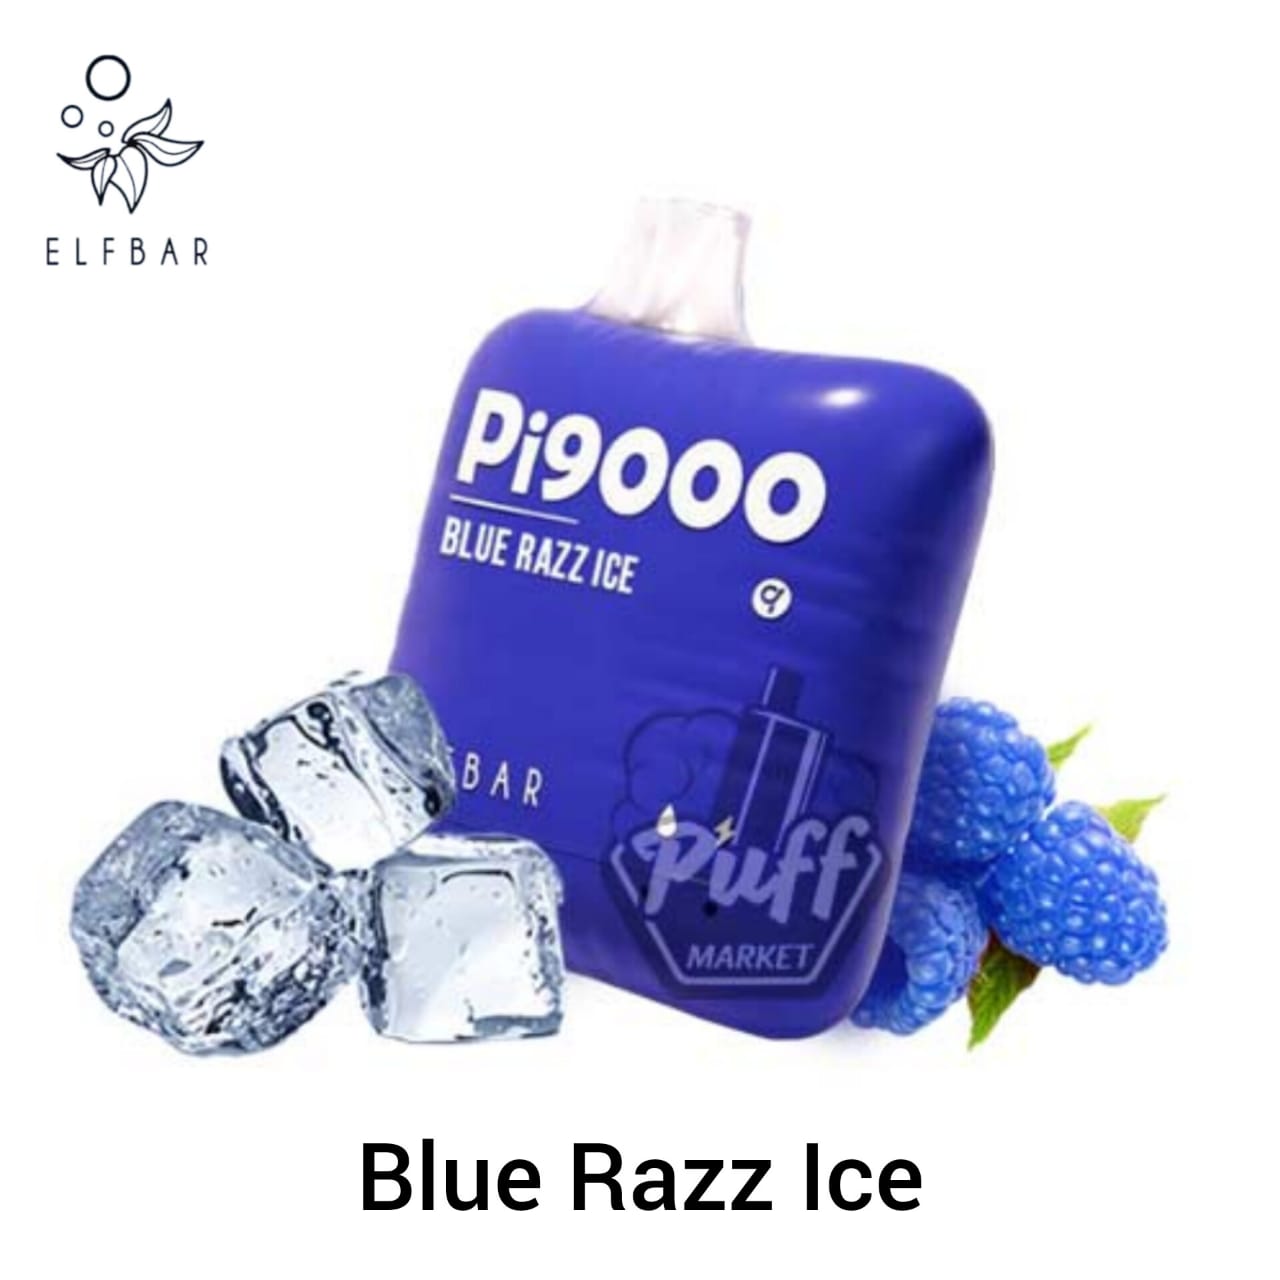 Elf Bar Pi 9000 BLUE RAZZ ICE Puffs Disposable